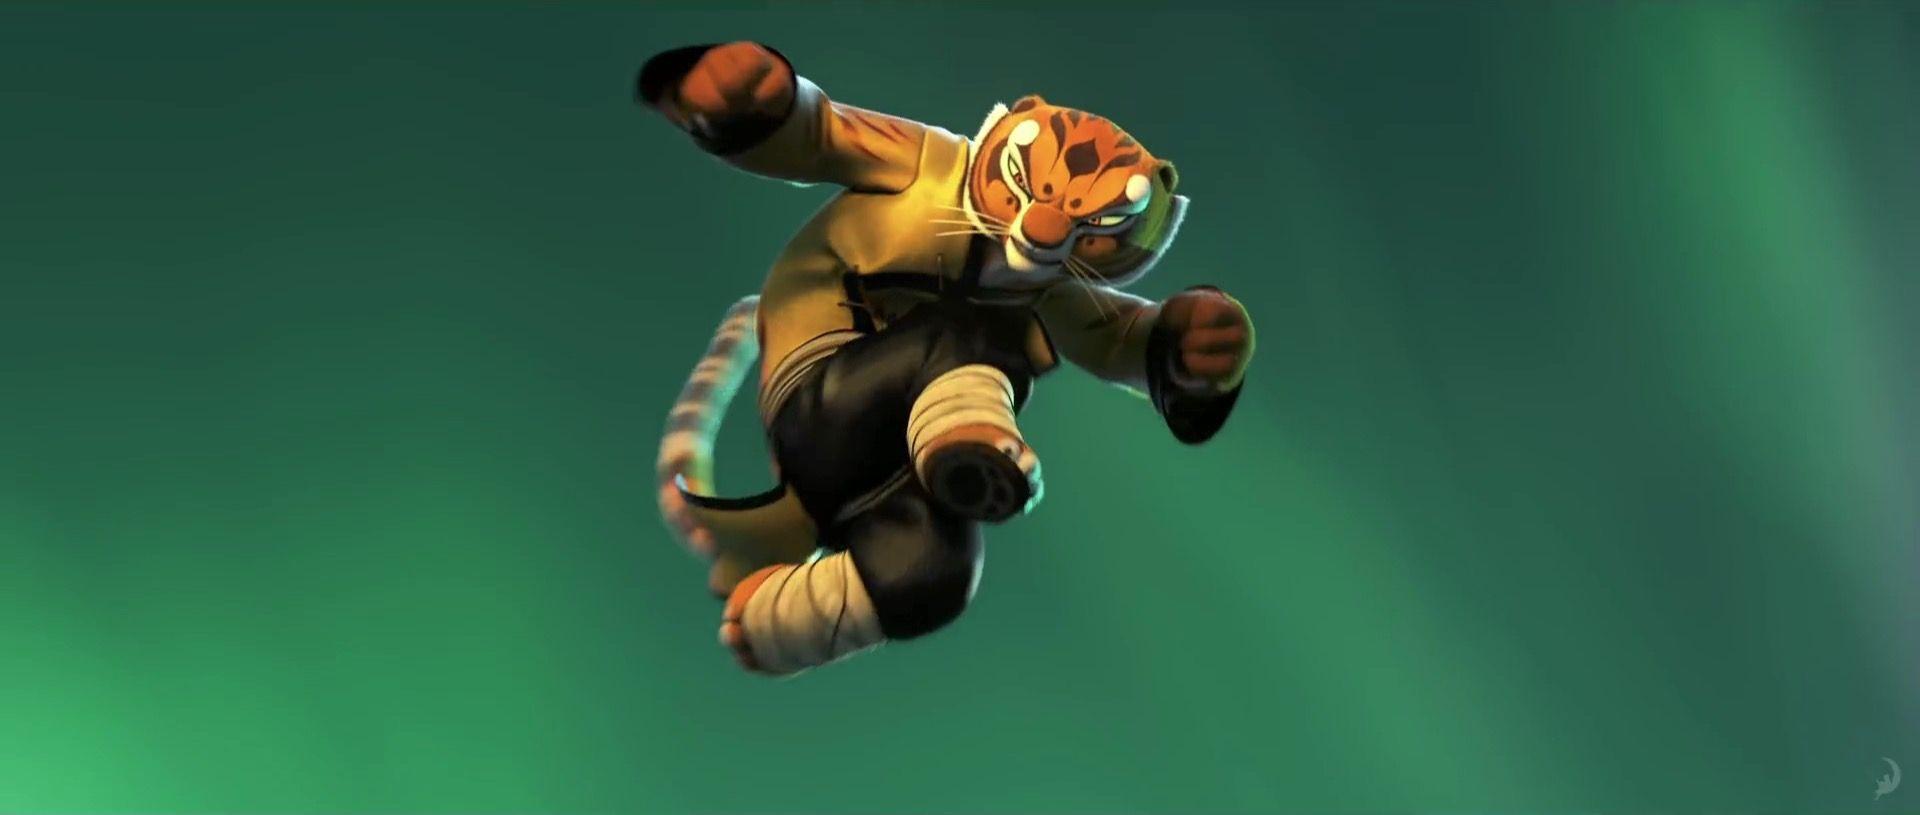 Tigress from Kung Fu Panda 3 Desktop Wallpaper